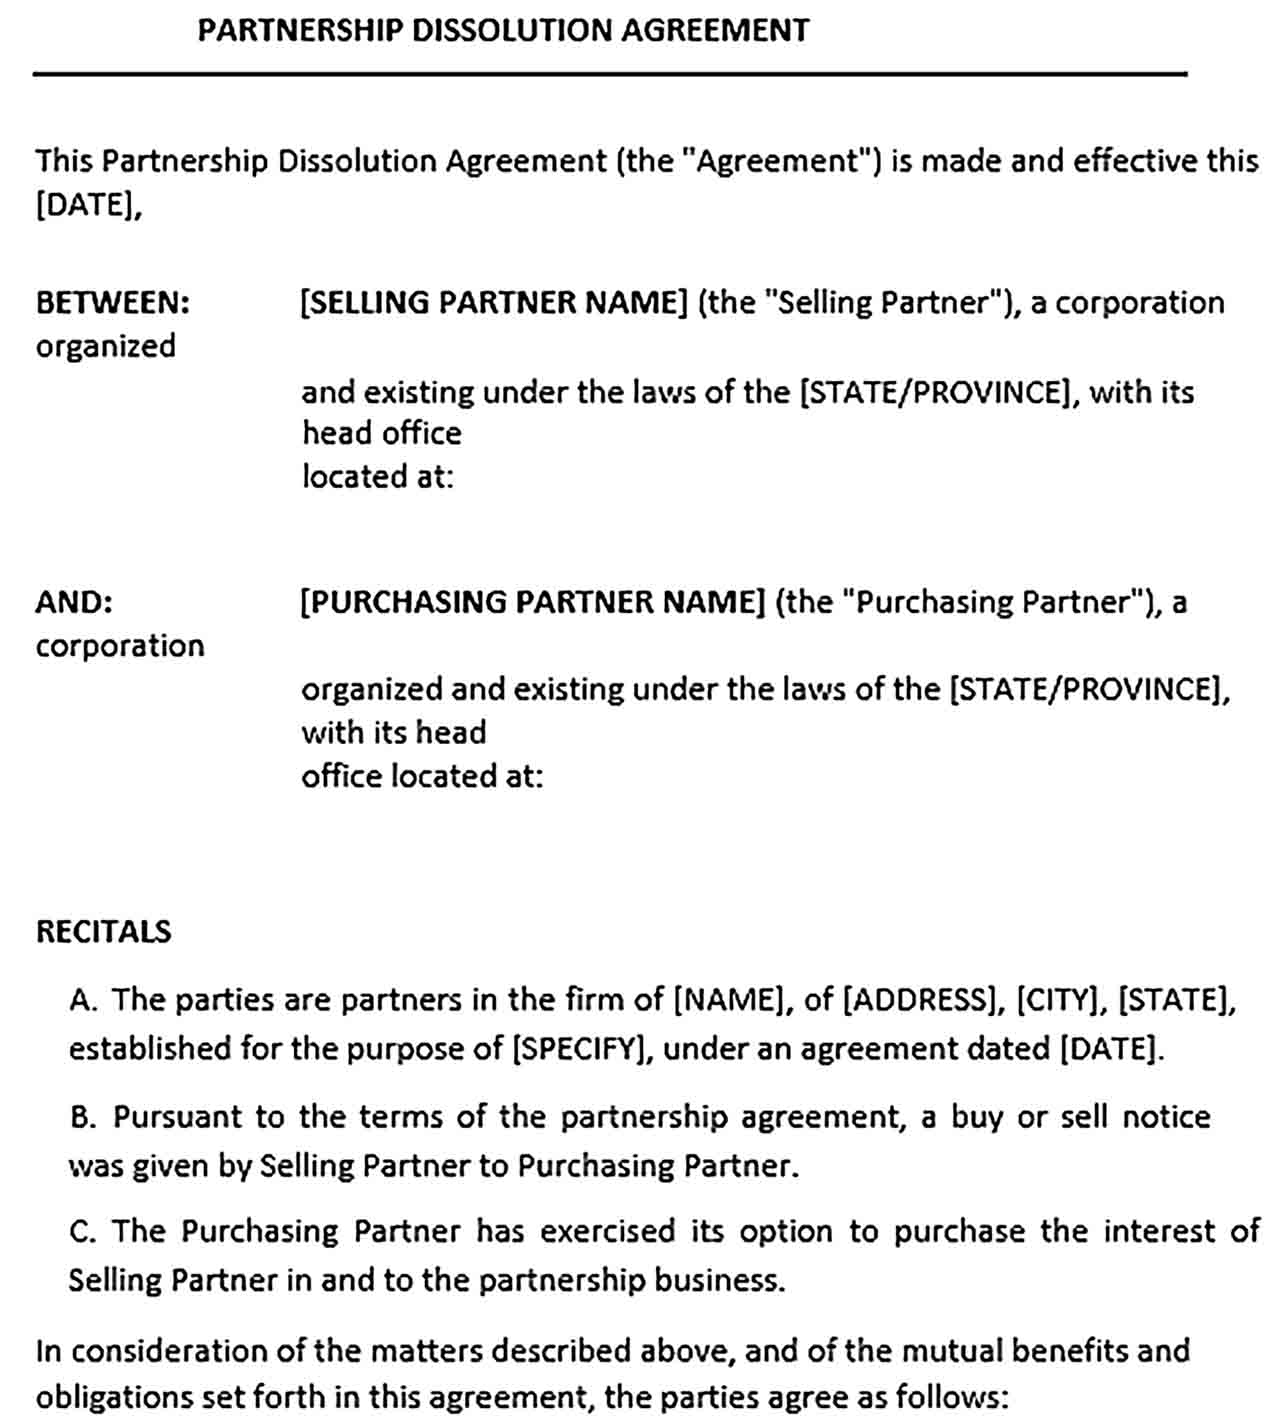 Sample Partnership Dissoluation Agreement